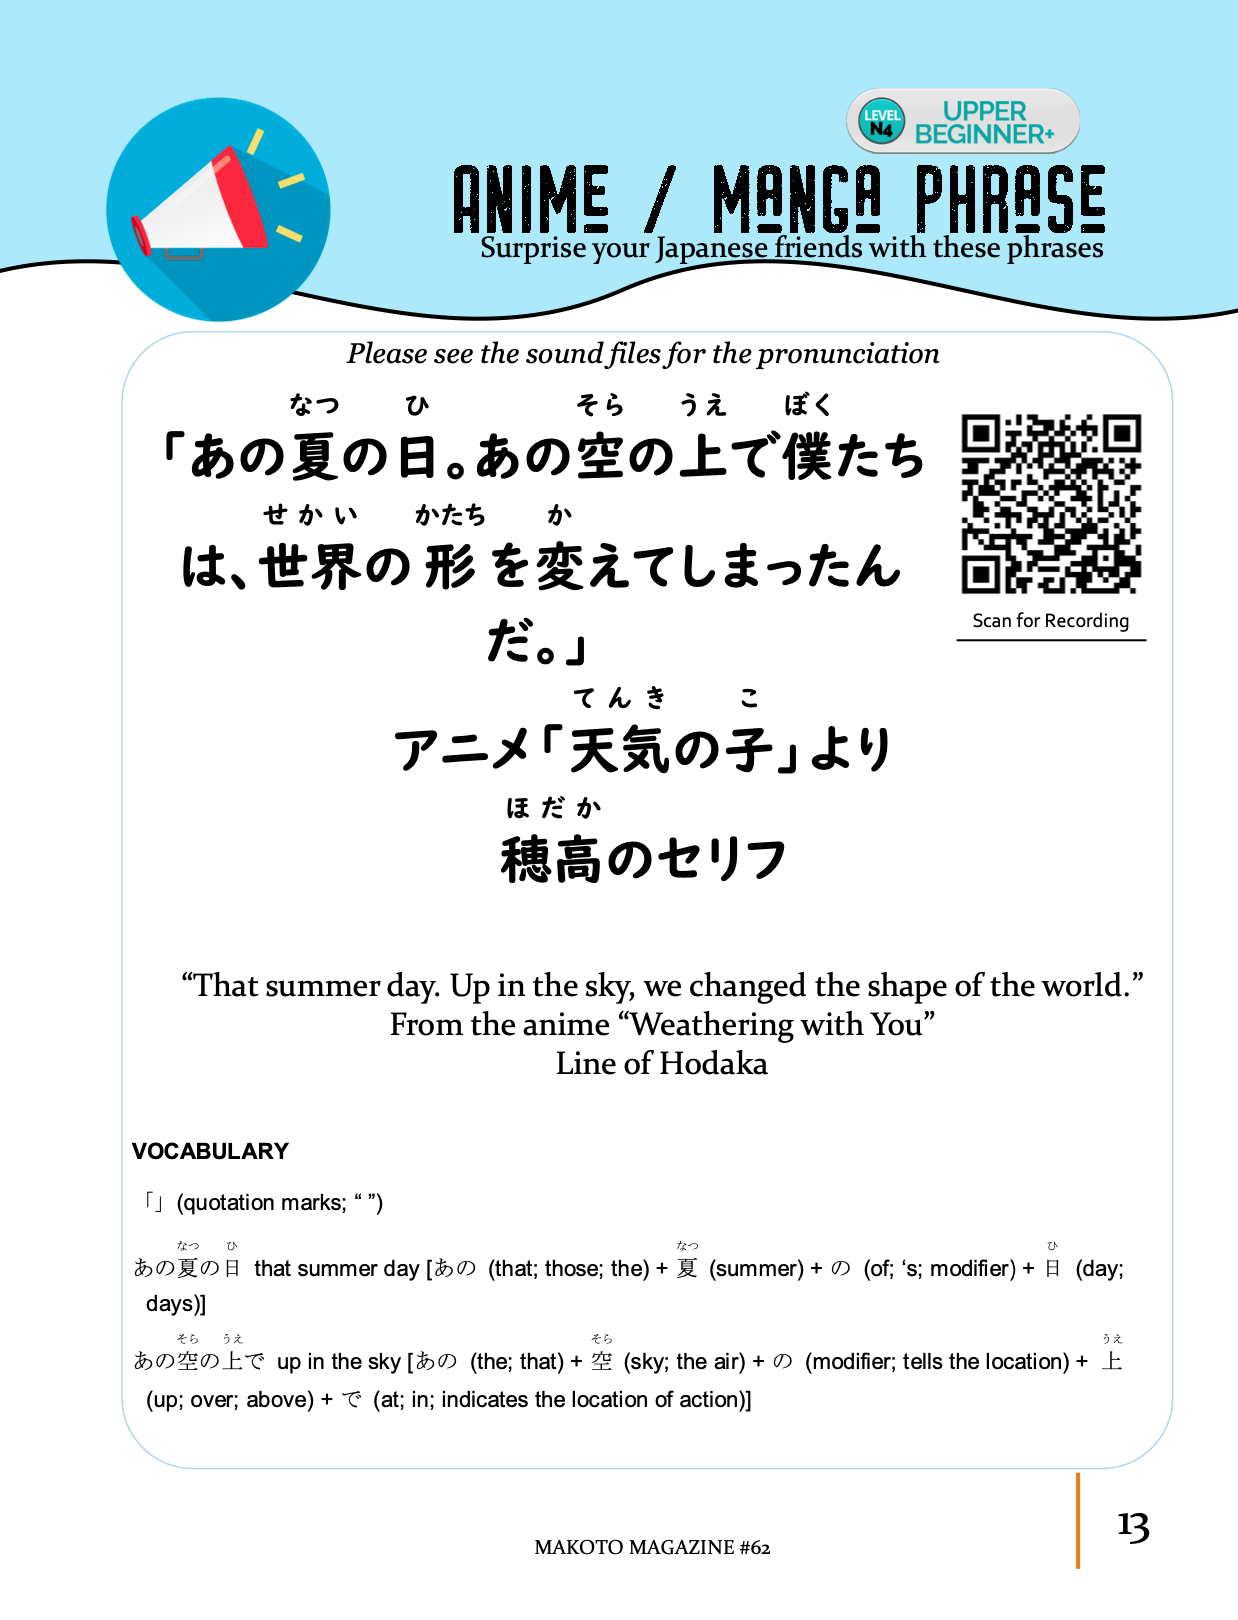 Makoto Magazine #62 - All the Fun Japanese Not Found in Textbooks